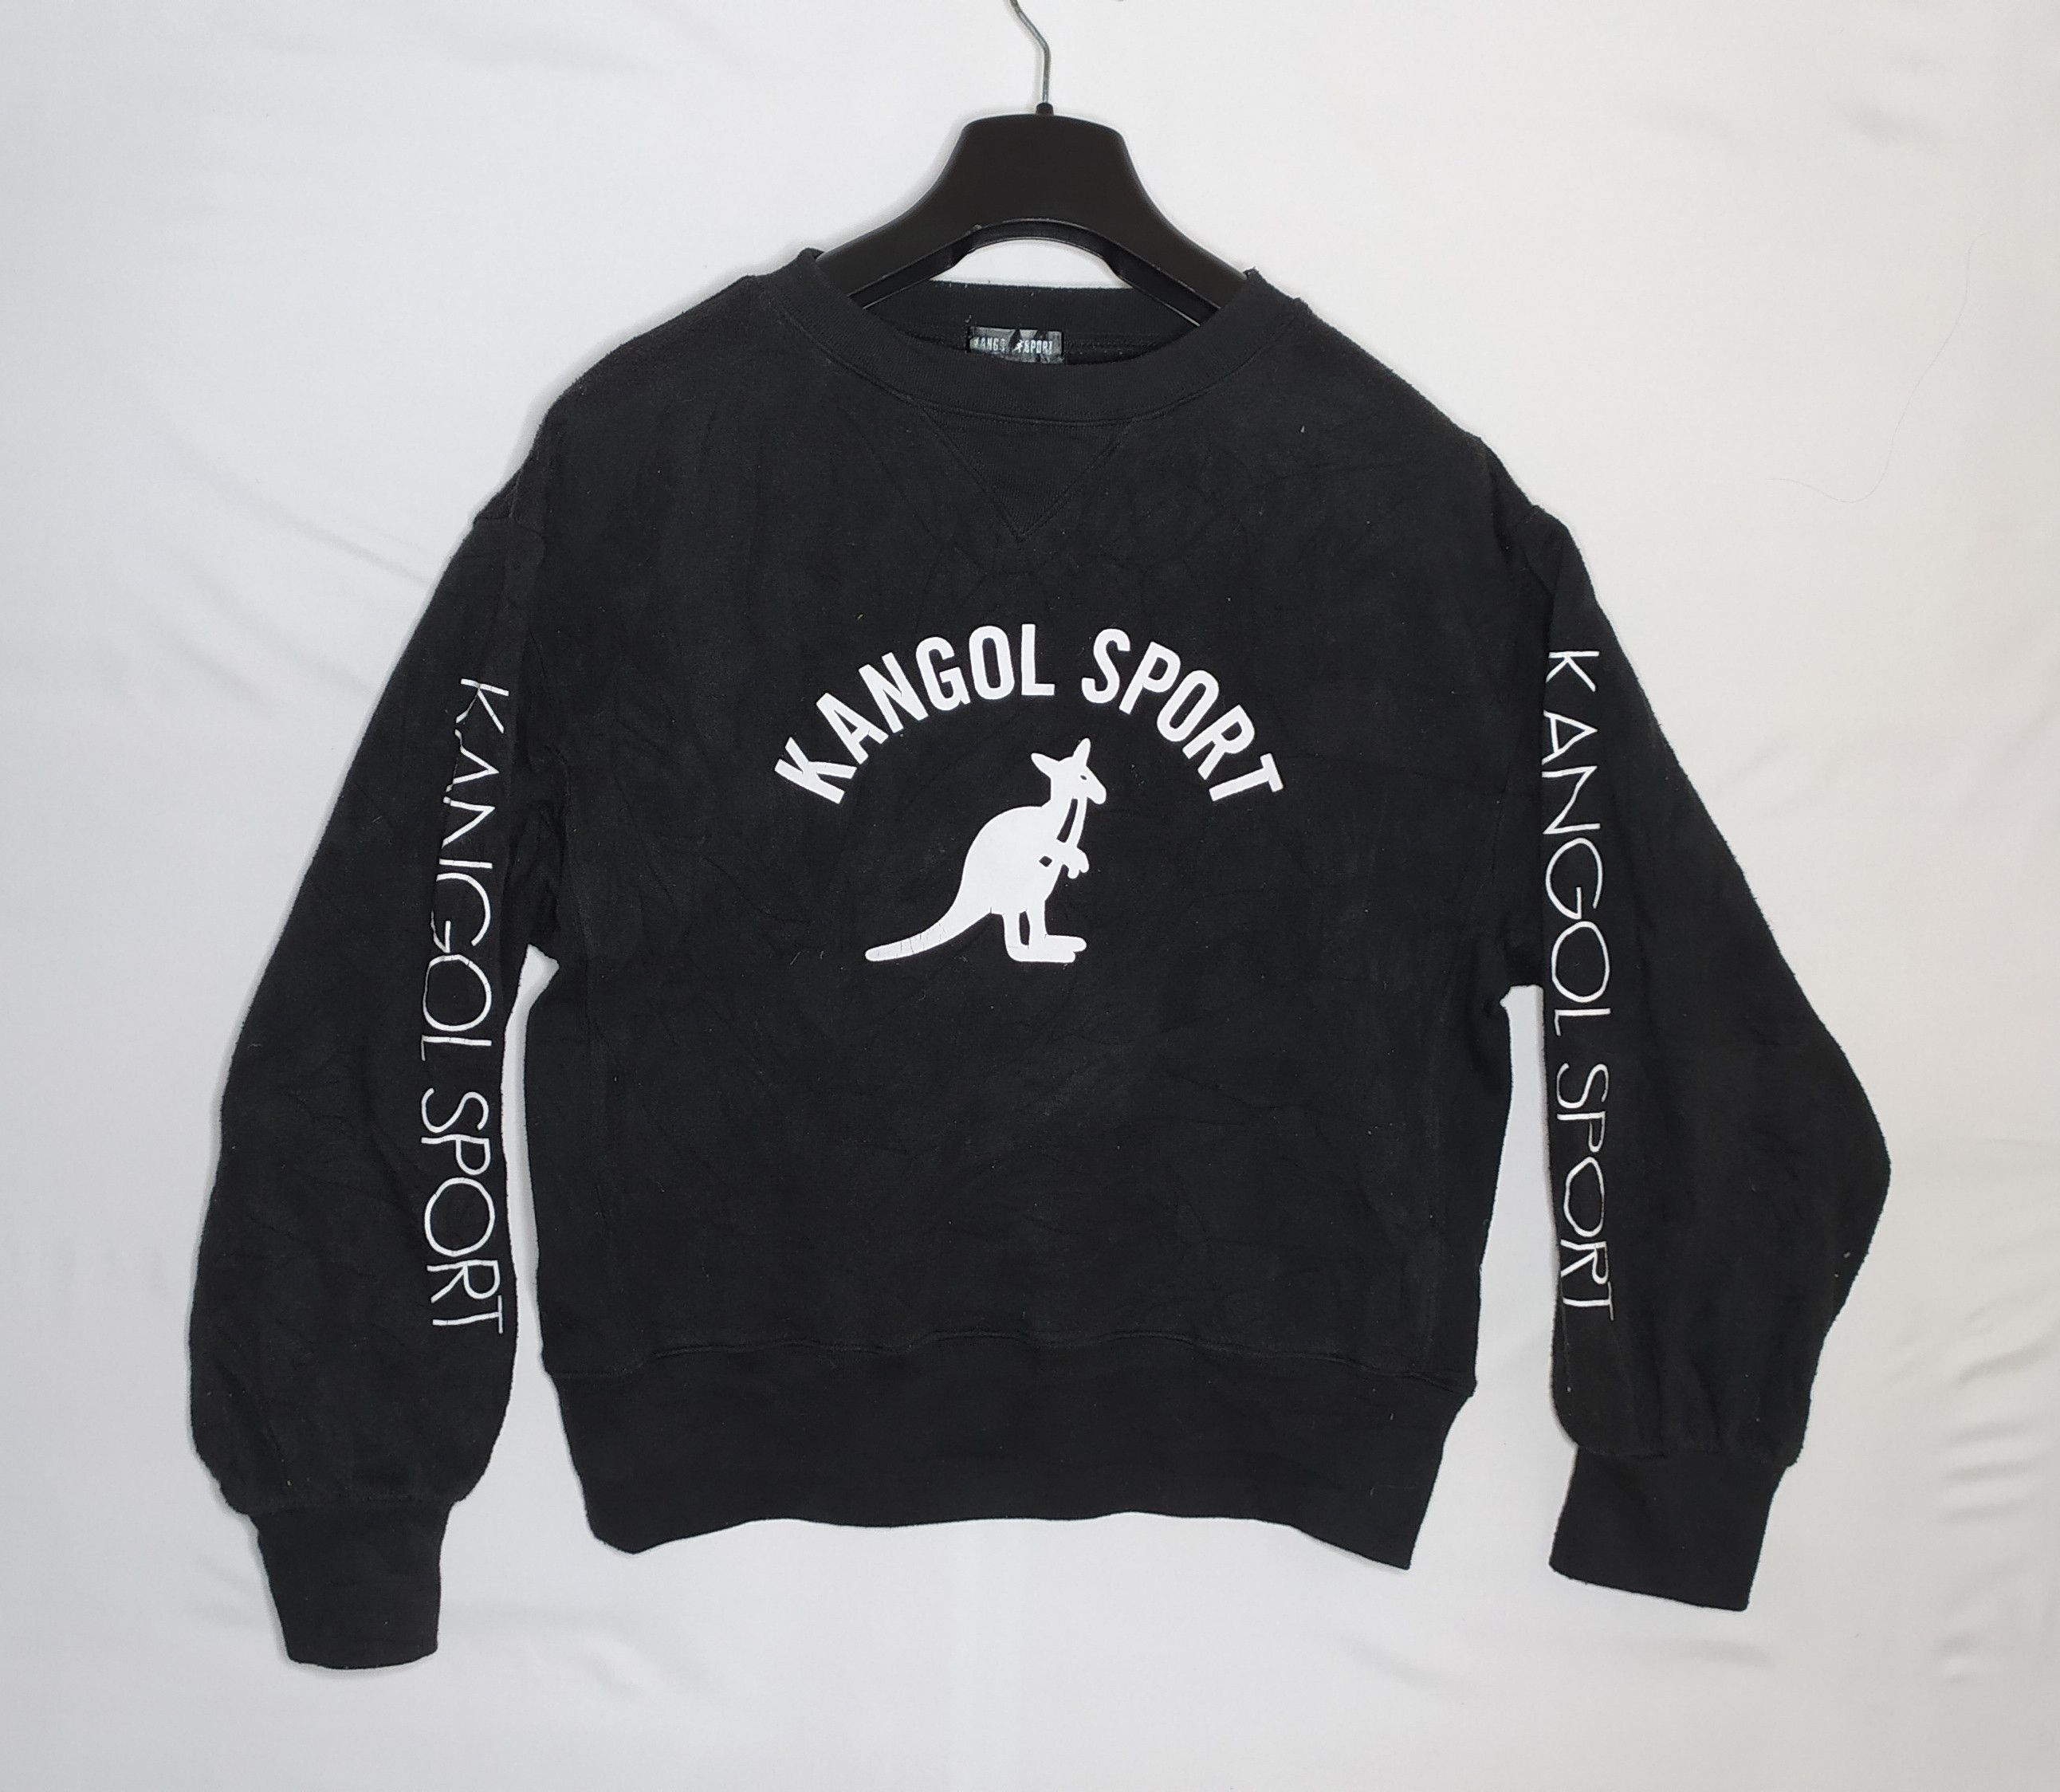 Kangol Big Logo Kango Sport sweatshirt | Grailed